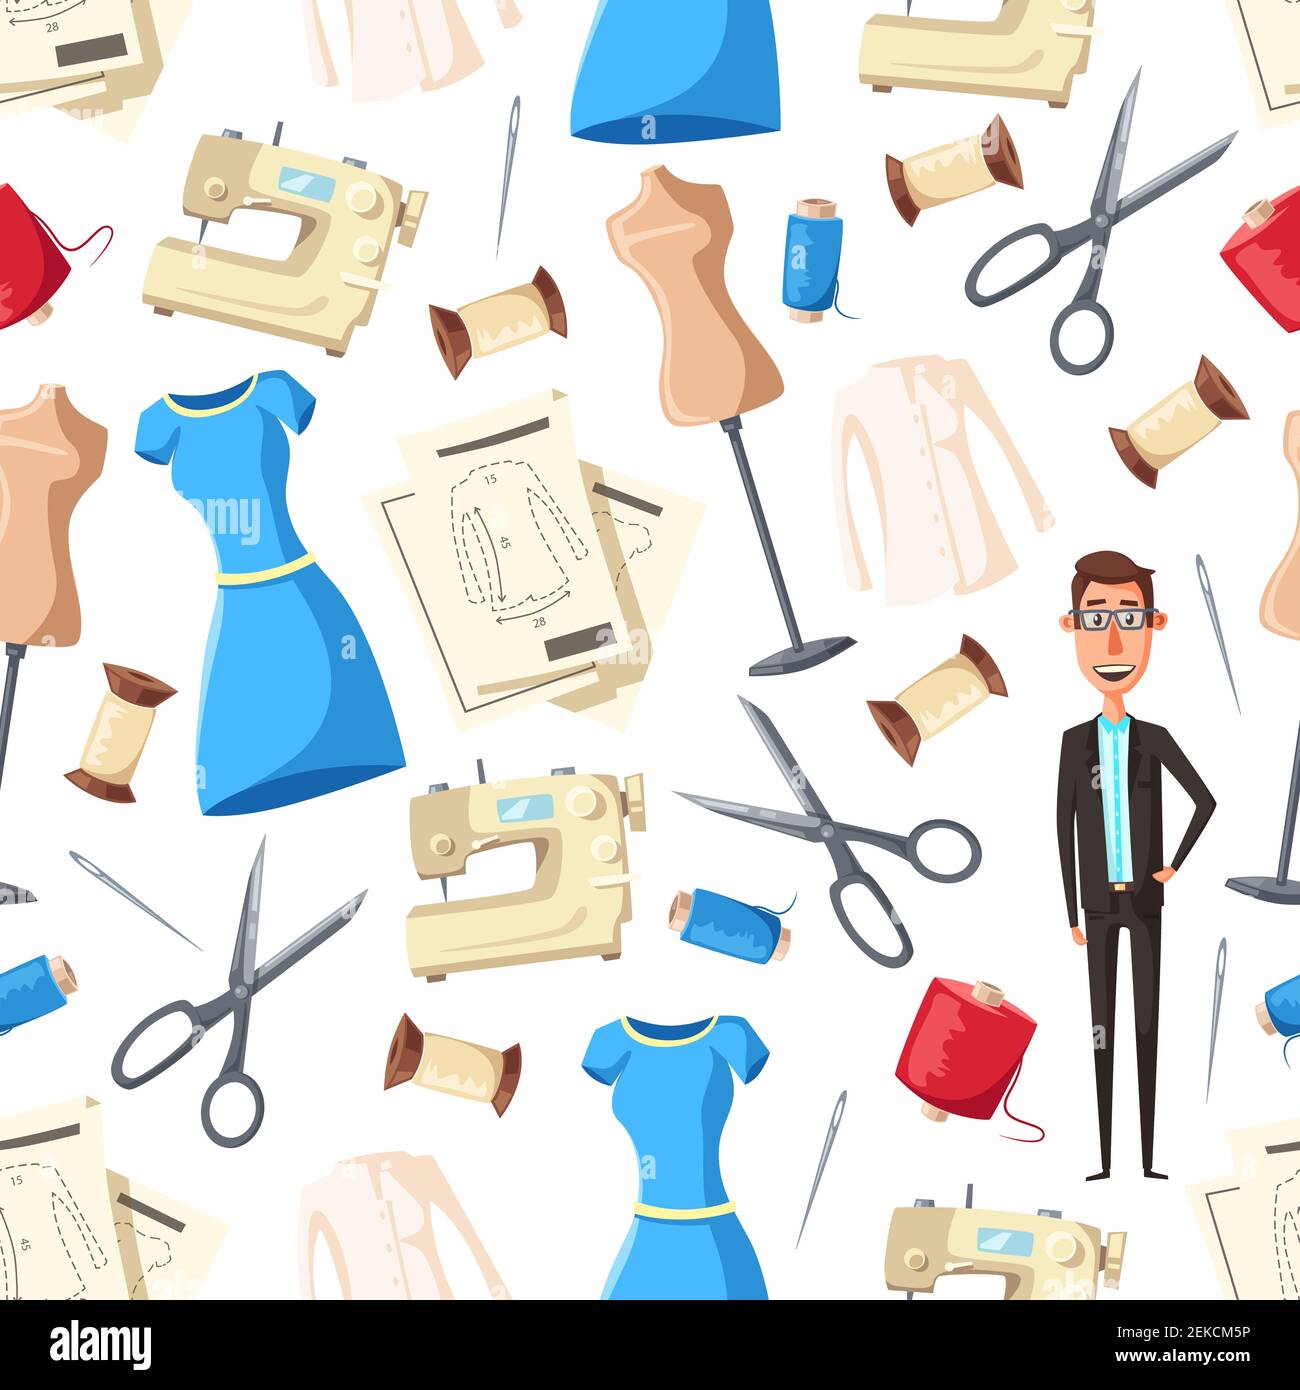 Tools & Equipment - Dresspatternmaking